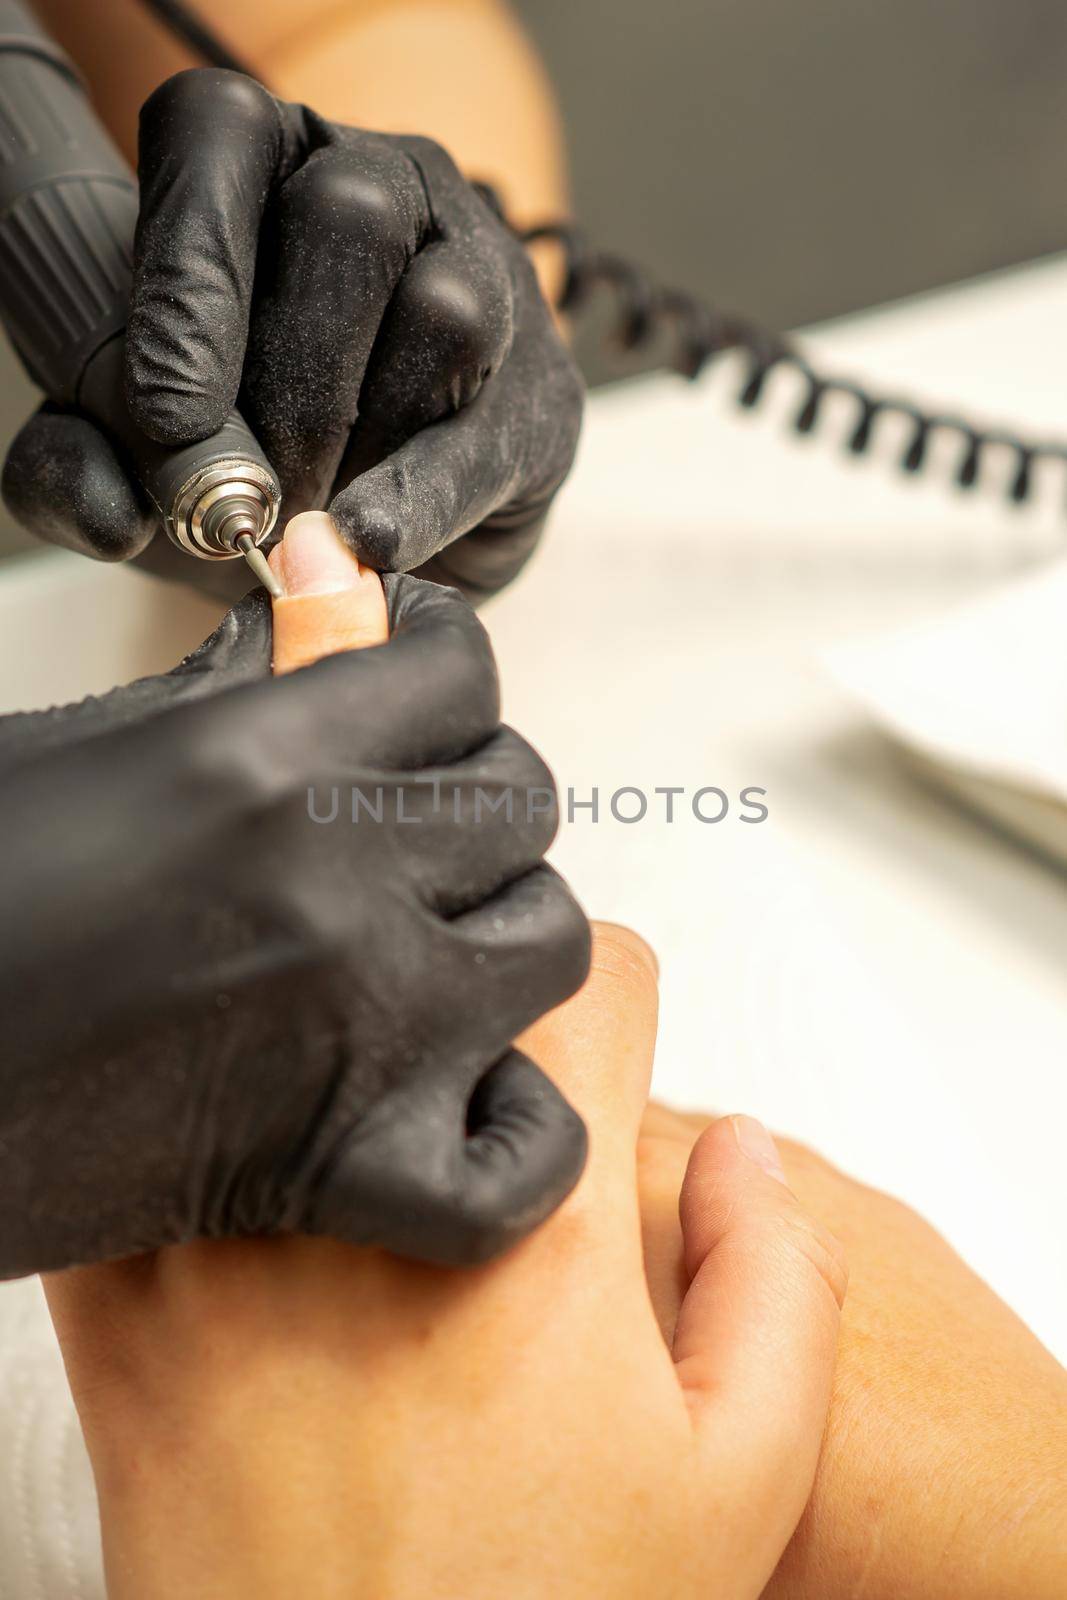 Manicure master uses electric nail file machine in a nail salon, close up. by okskukuruza